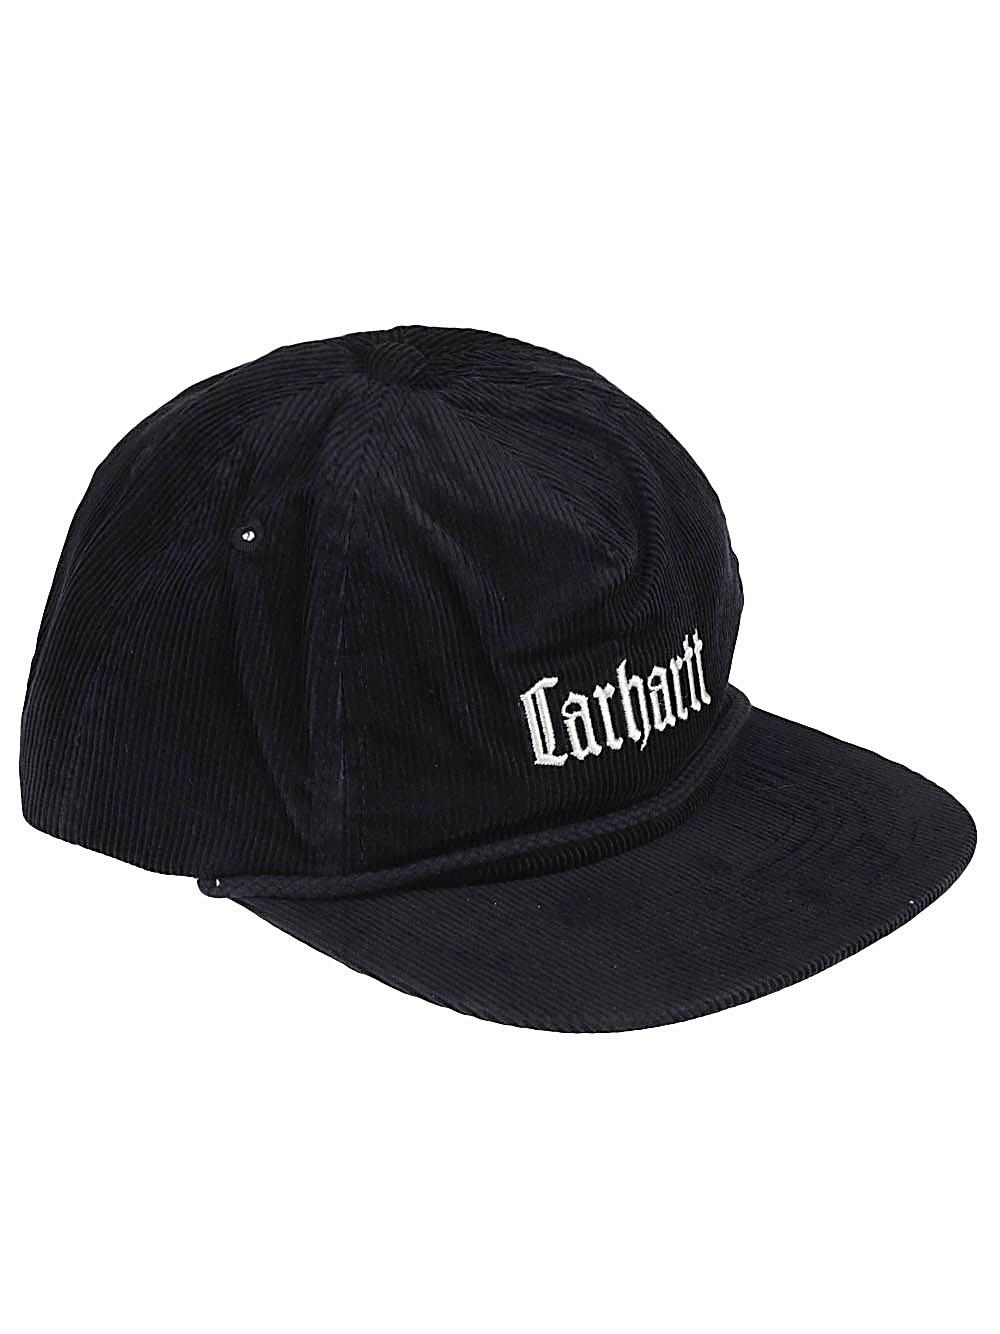 carhartt men's force louisville hat skull caps, black